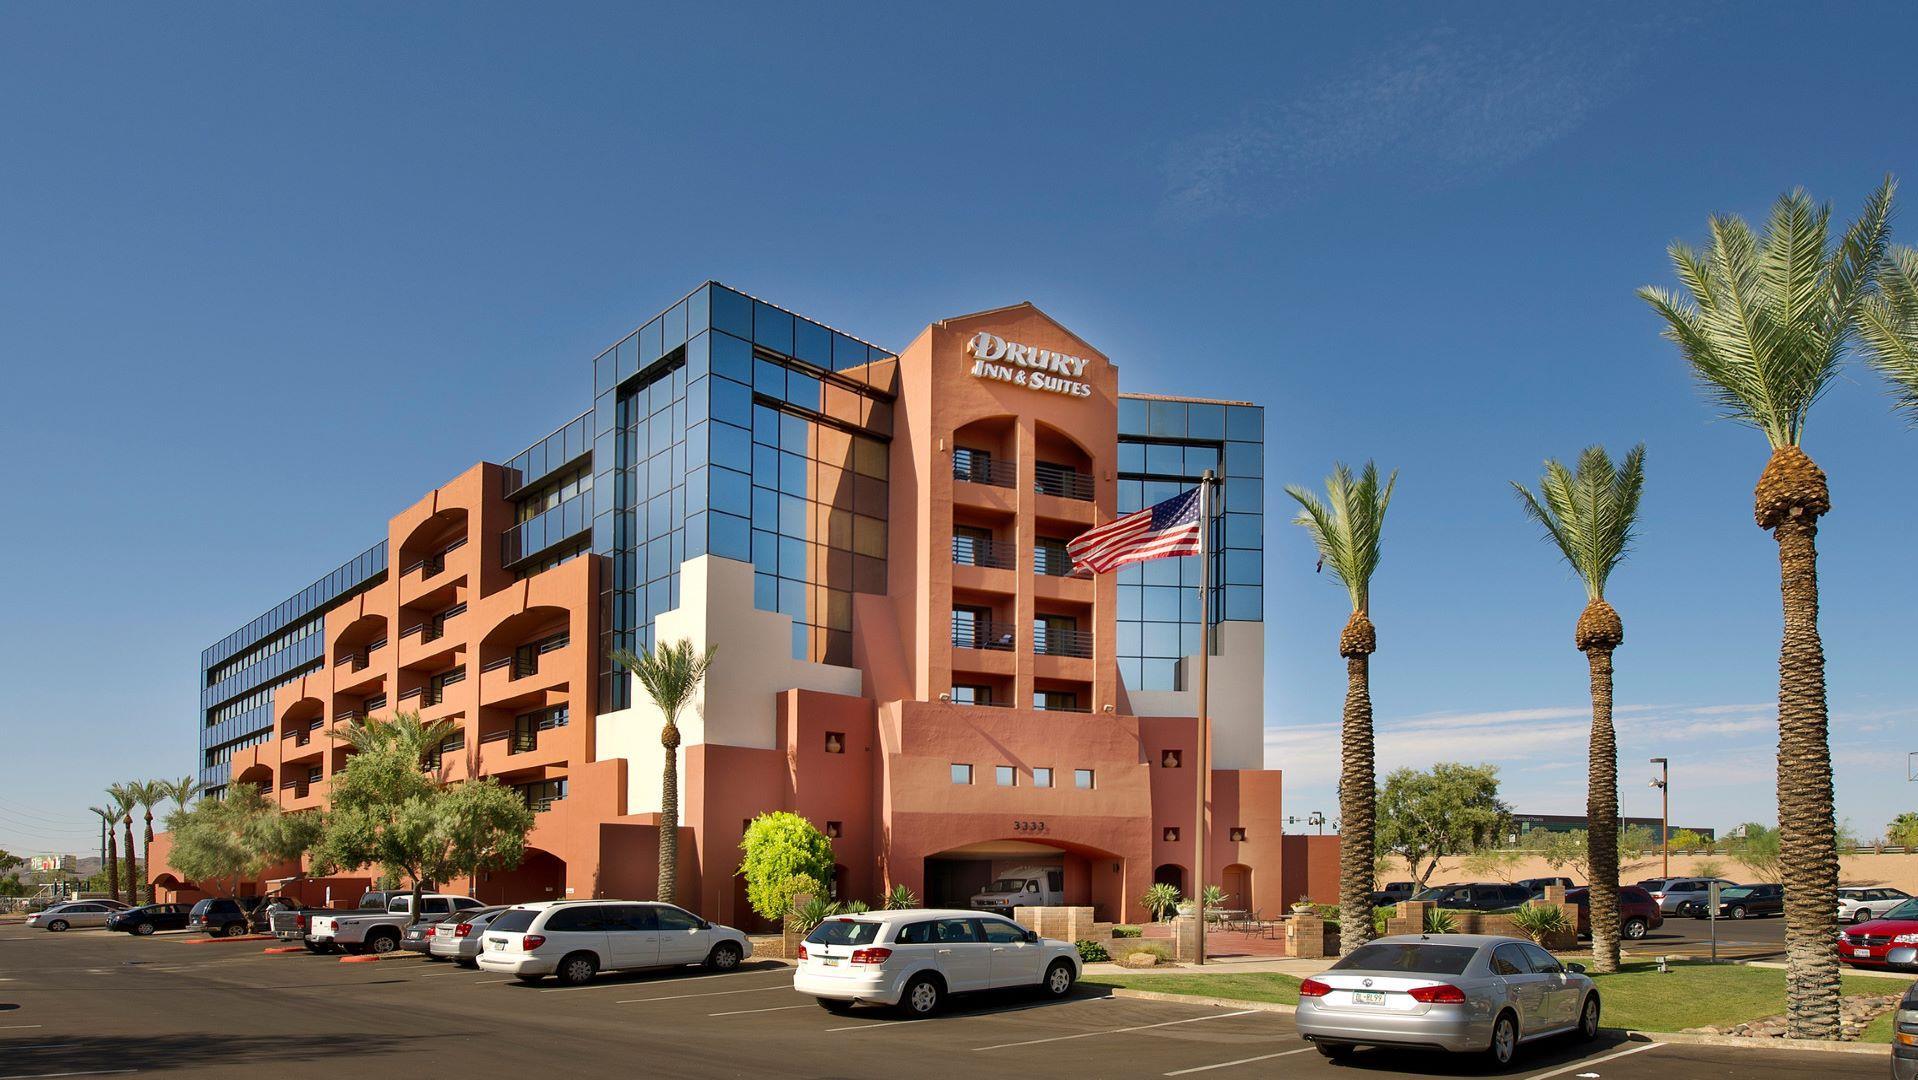 Drury Inn & Suites Phoenix Airport in Phoenix, AZ